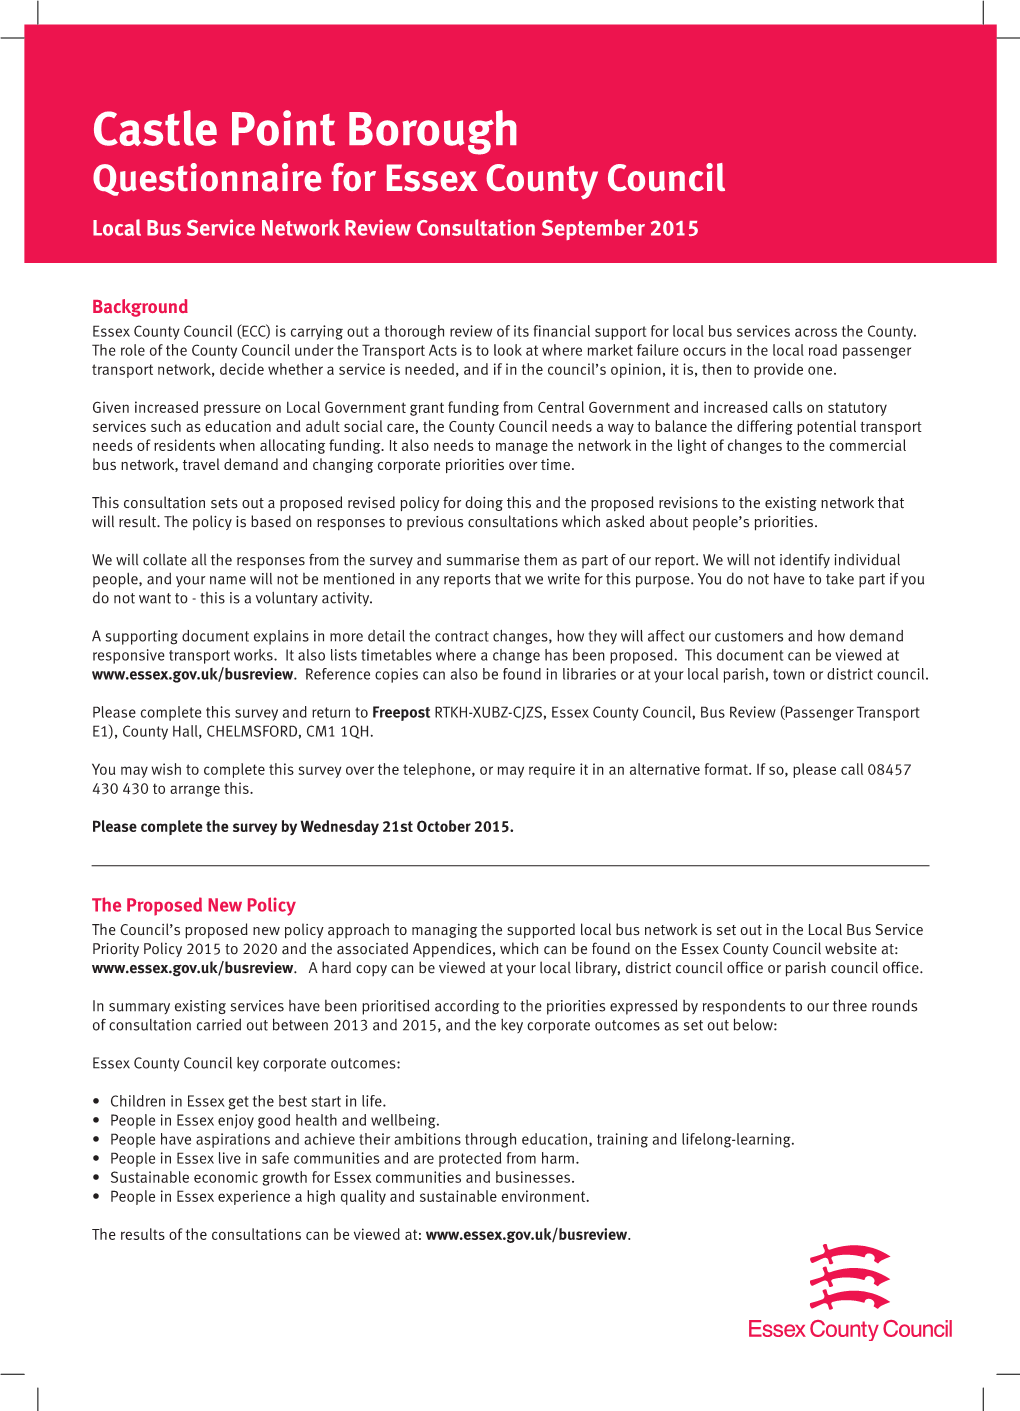 Castle Point Borough Questionnaire for Essex County Council Local Bus Service Network Review Consultation September 2015